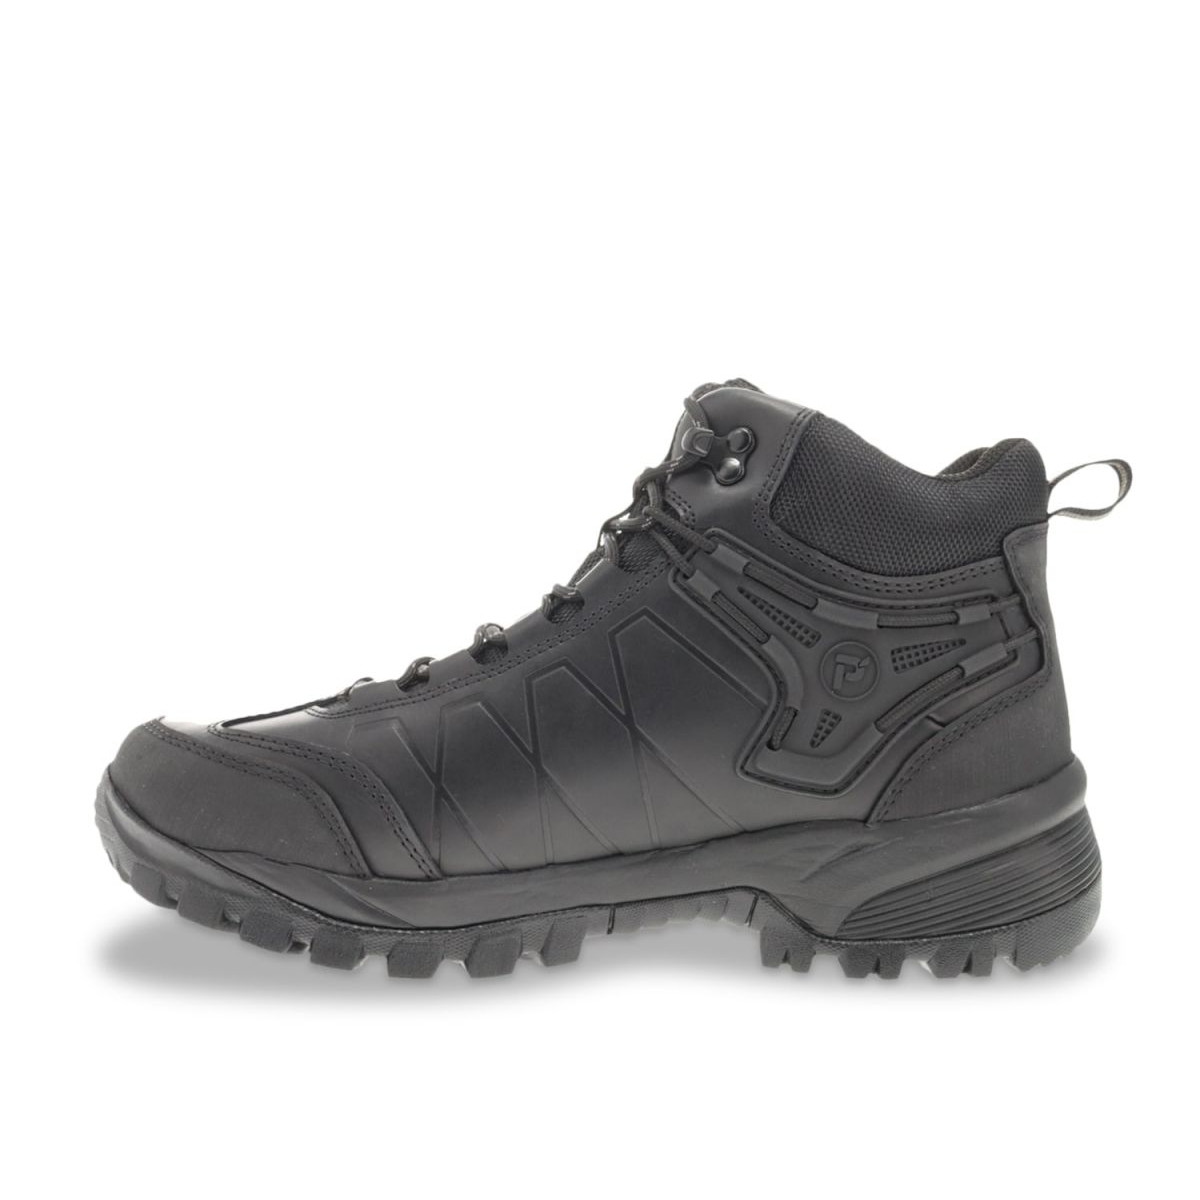 Propet Men's Ridge Walker Force Hiking Boots Black - MBA052LBLK BLACK - BLACK, 11 X-Wide